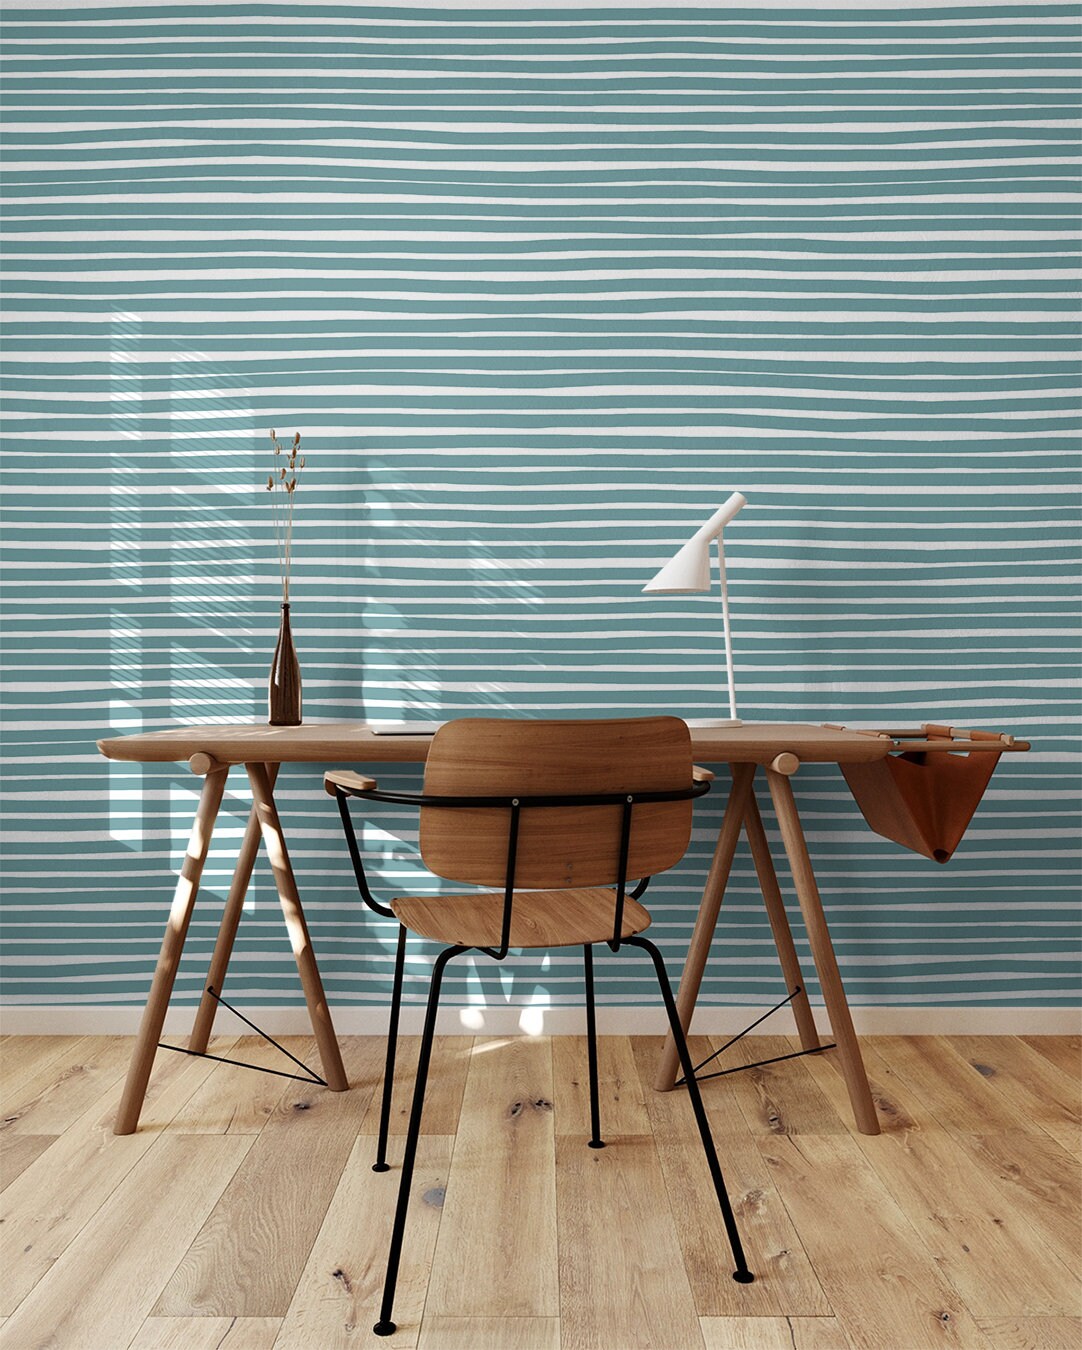 Teal Drawn Line Wallpaper | Removable Wallpaper | Peel And Stick Wallpaper | Adhesive Wallpaper | Wall Paper Peel And Stick Wall Mural 2312 - JamesAndColors